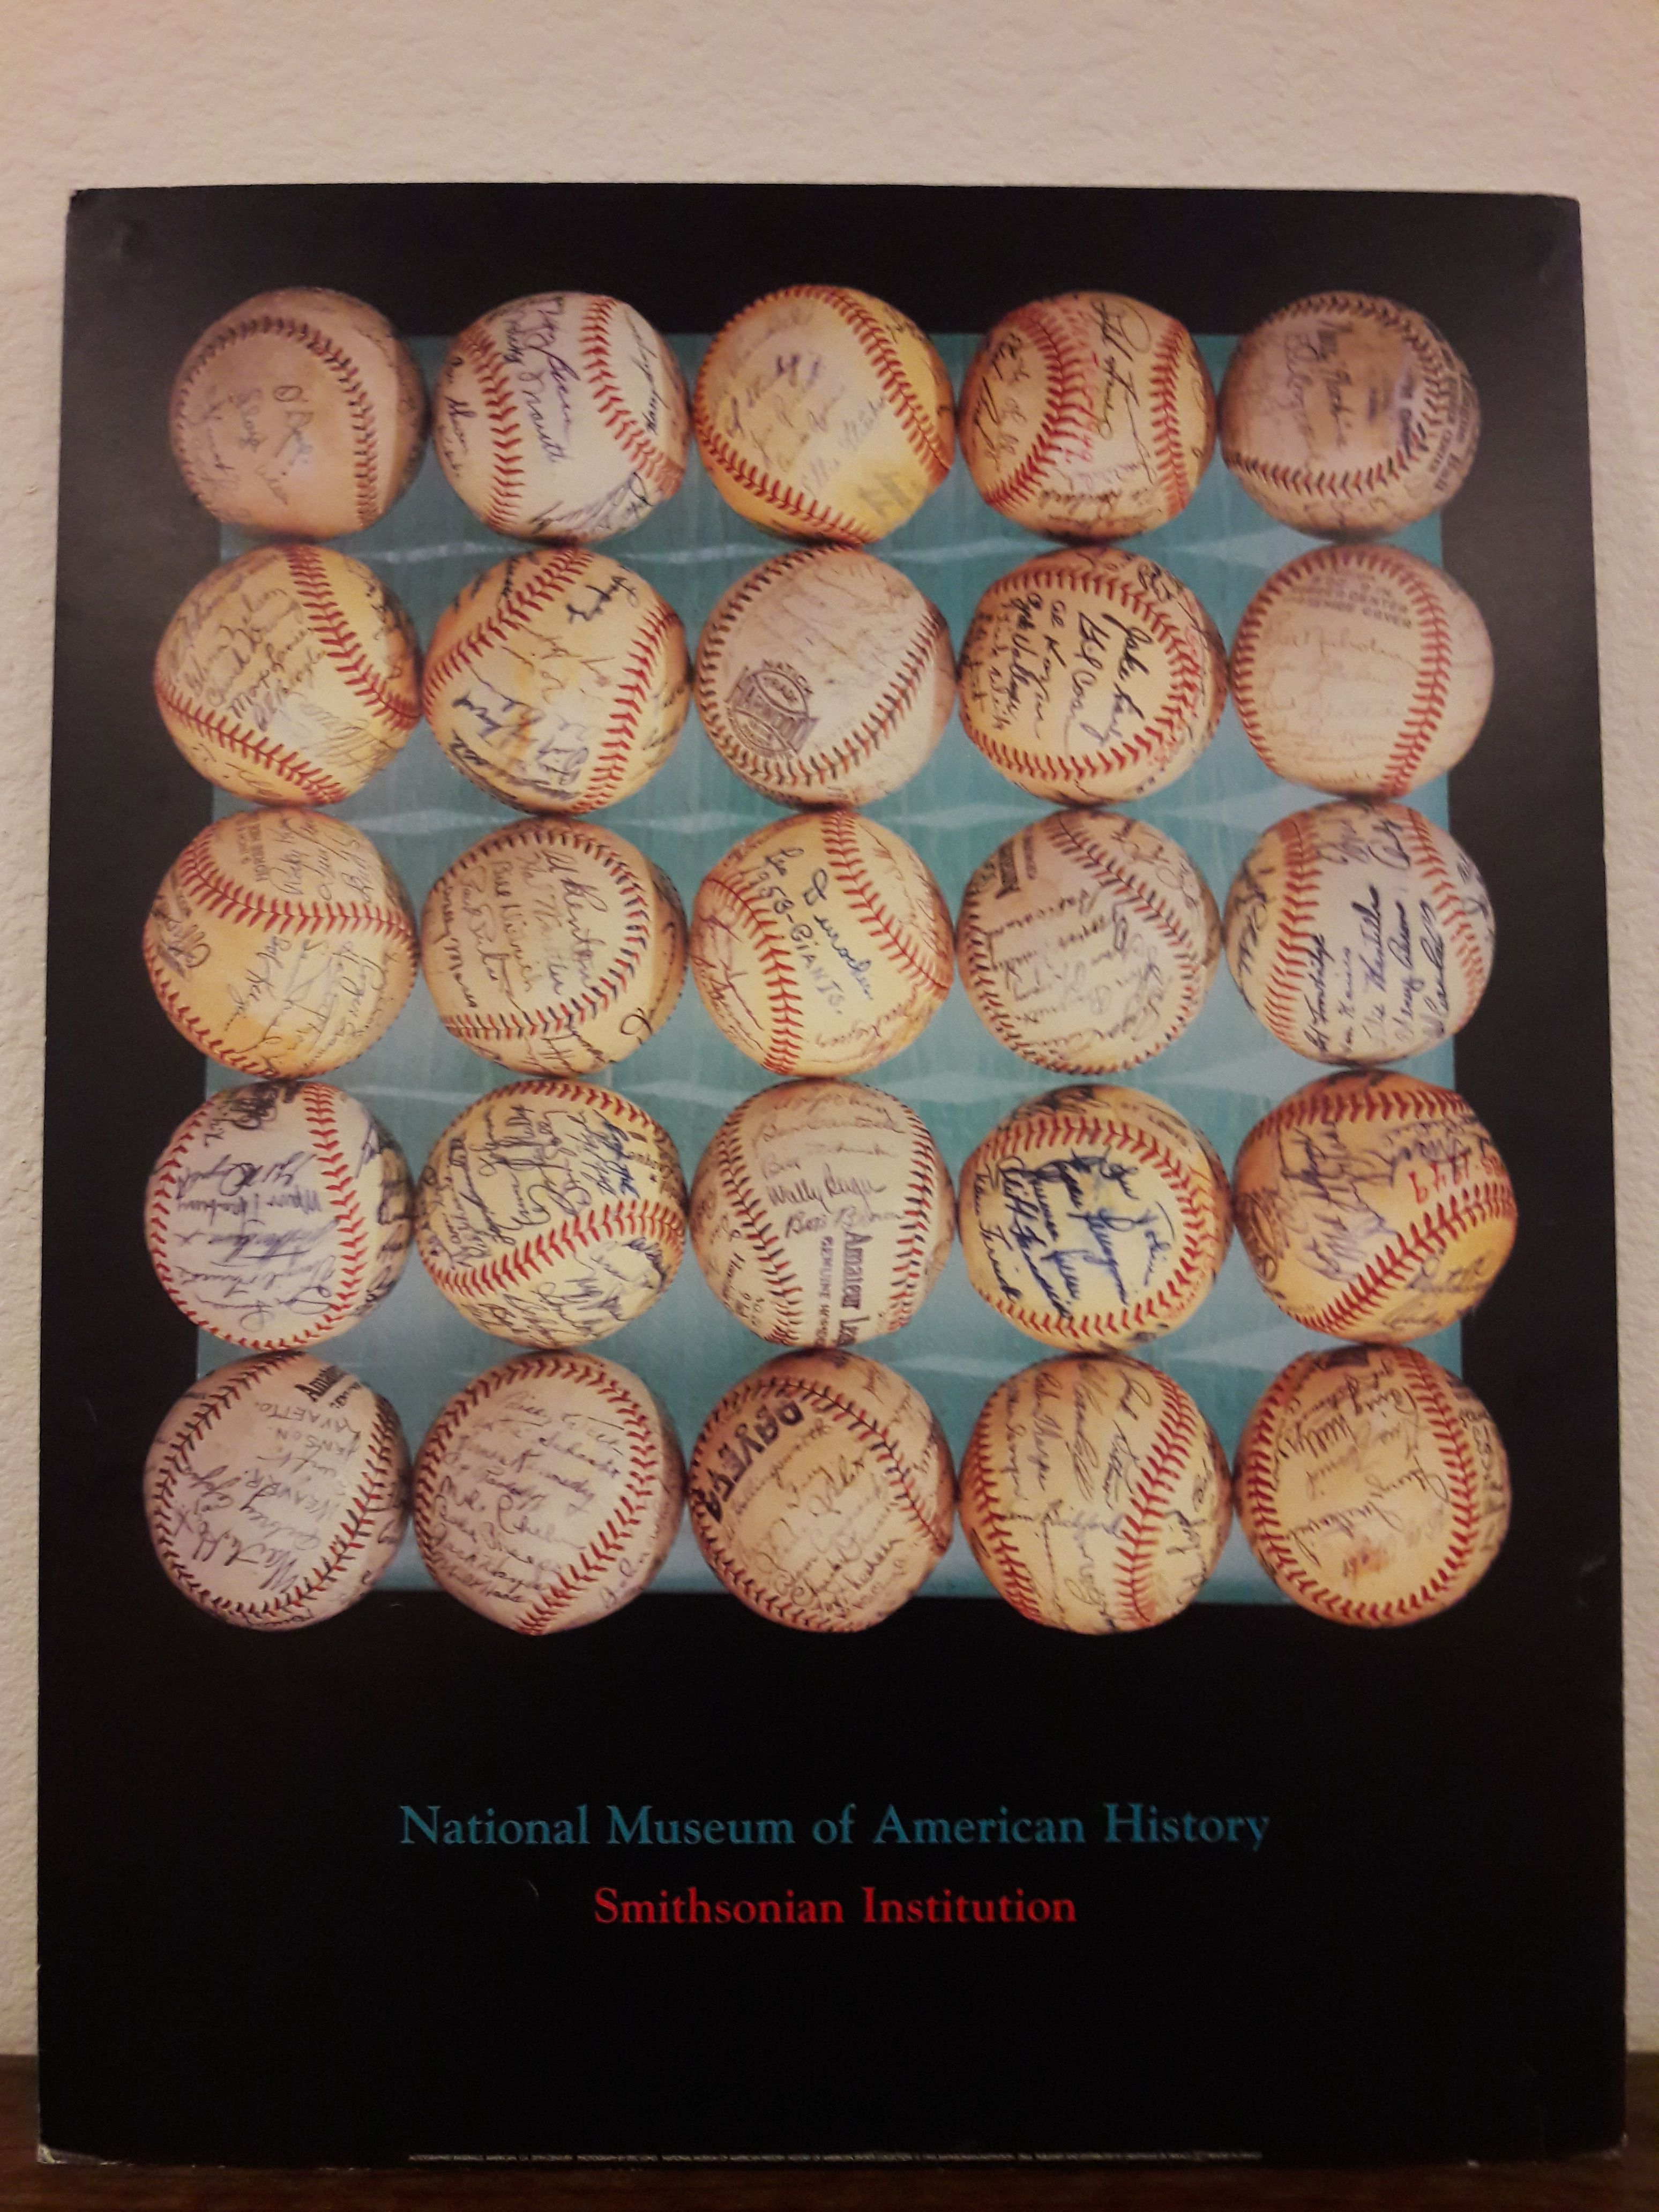 Autographed baseballs poster